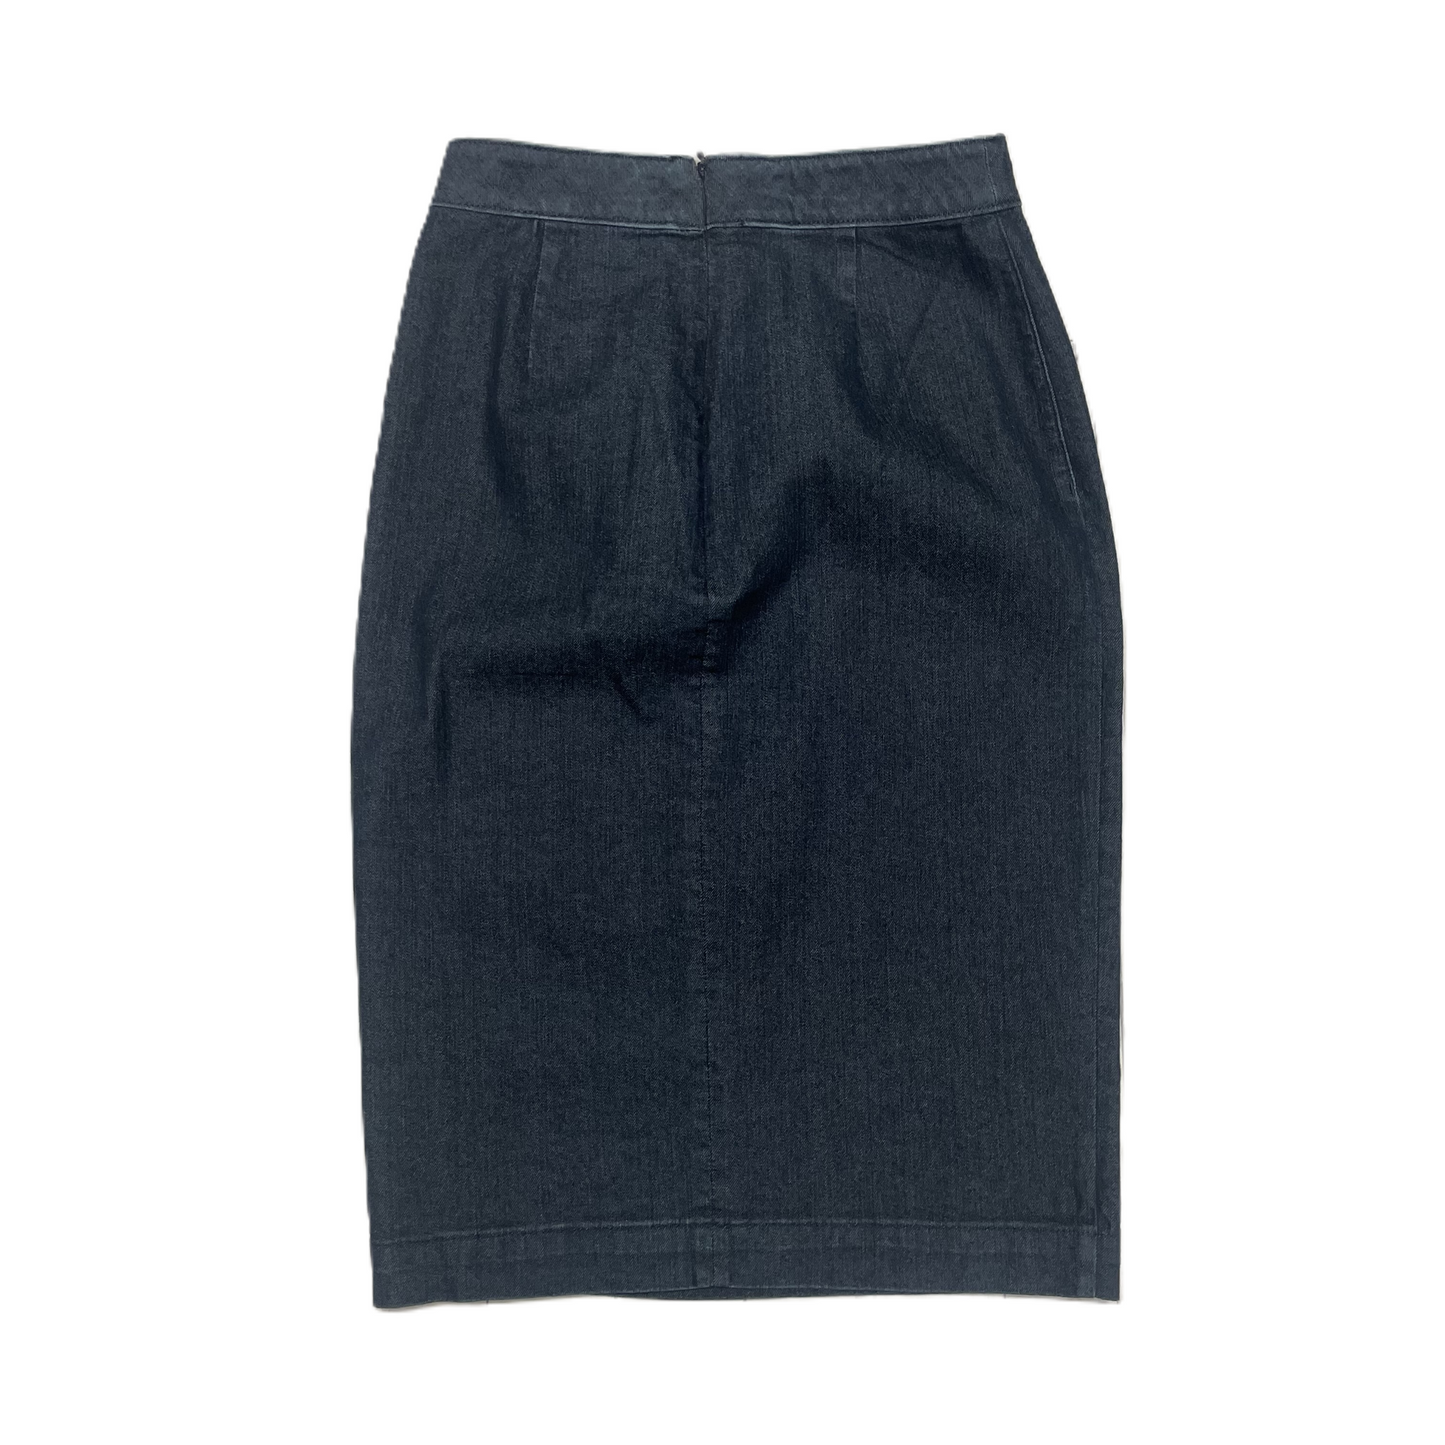 Blue Skirt Midi By White House Black Market, Size: Xs